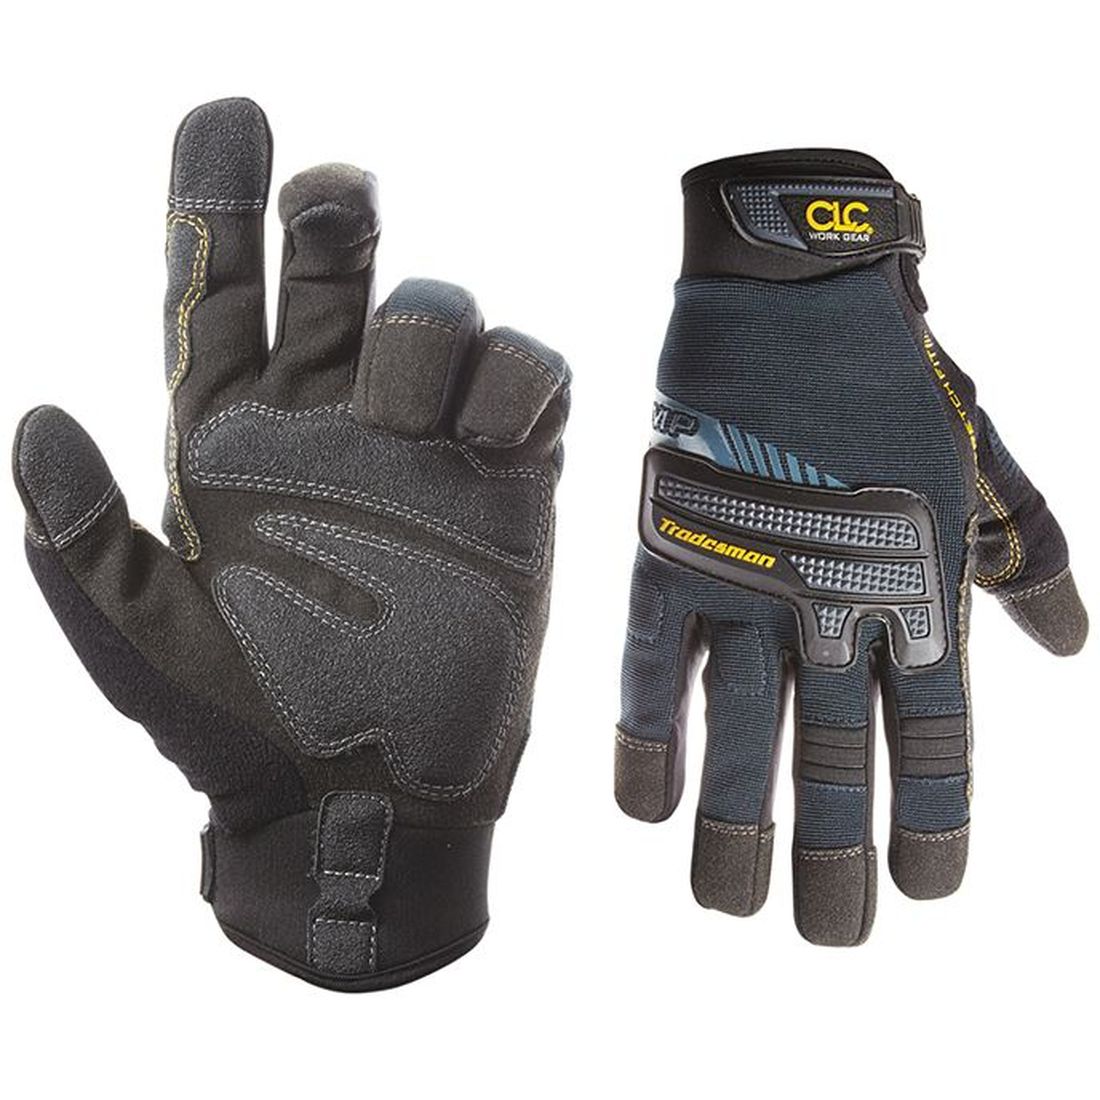 Kuny's Tradesman Flex Grip  Gloves - Large                                            